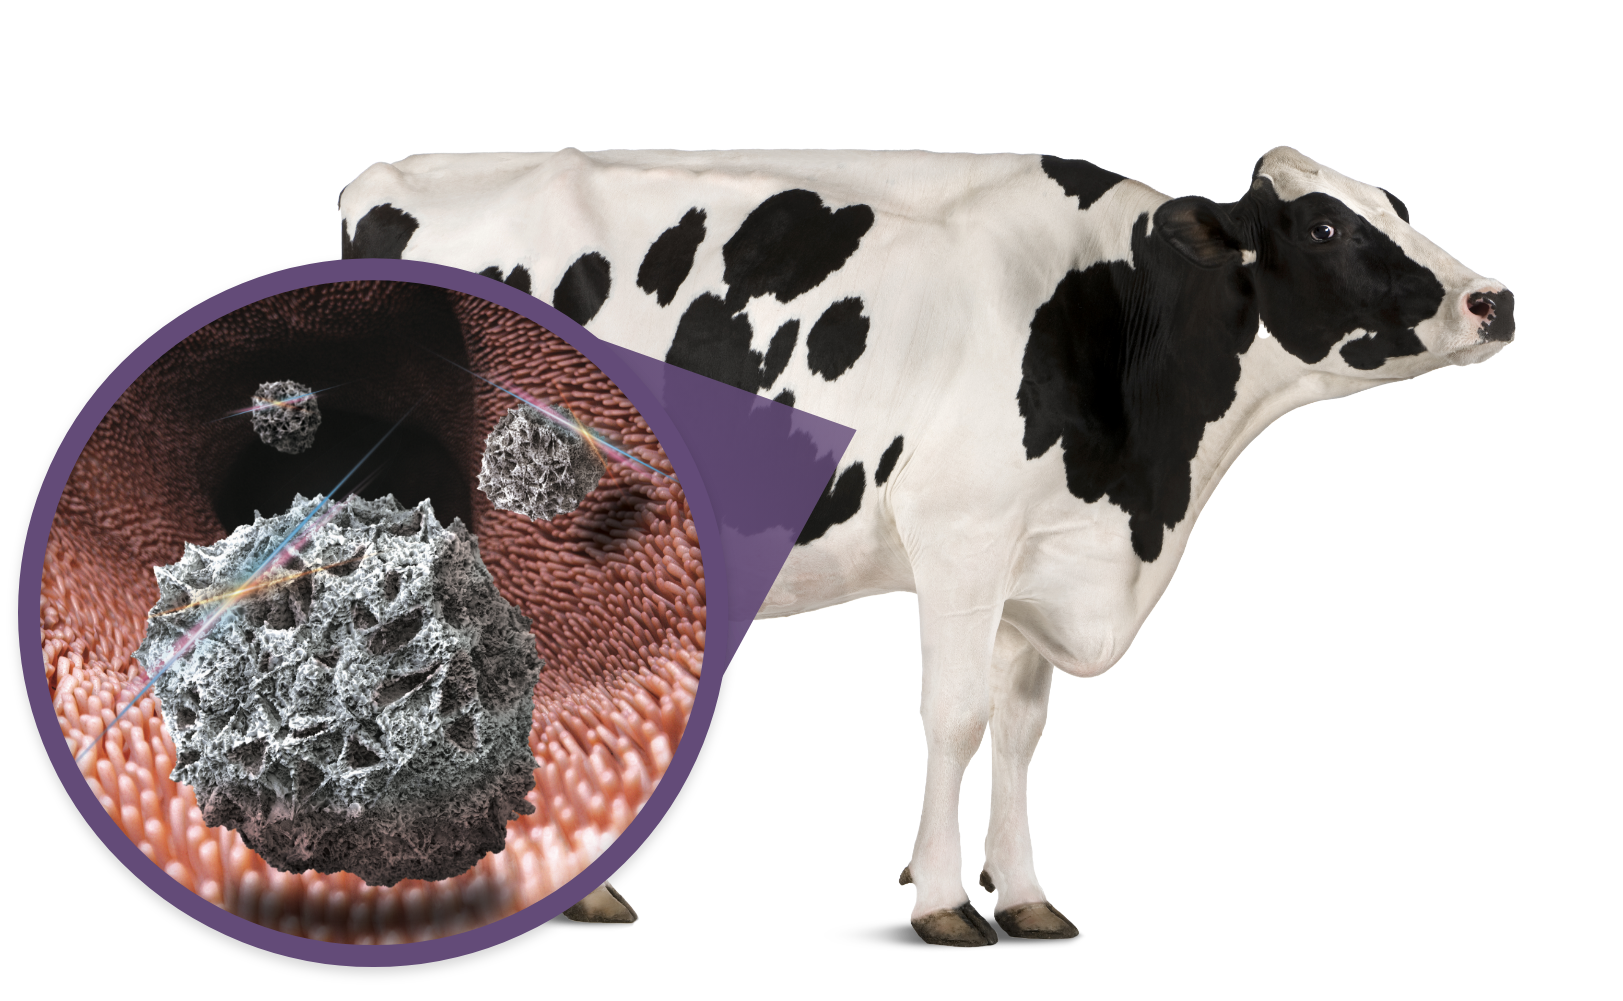 Llamada púrpura intestino costado vaca lechera.